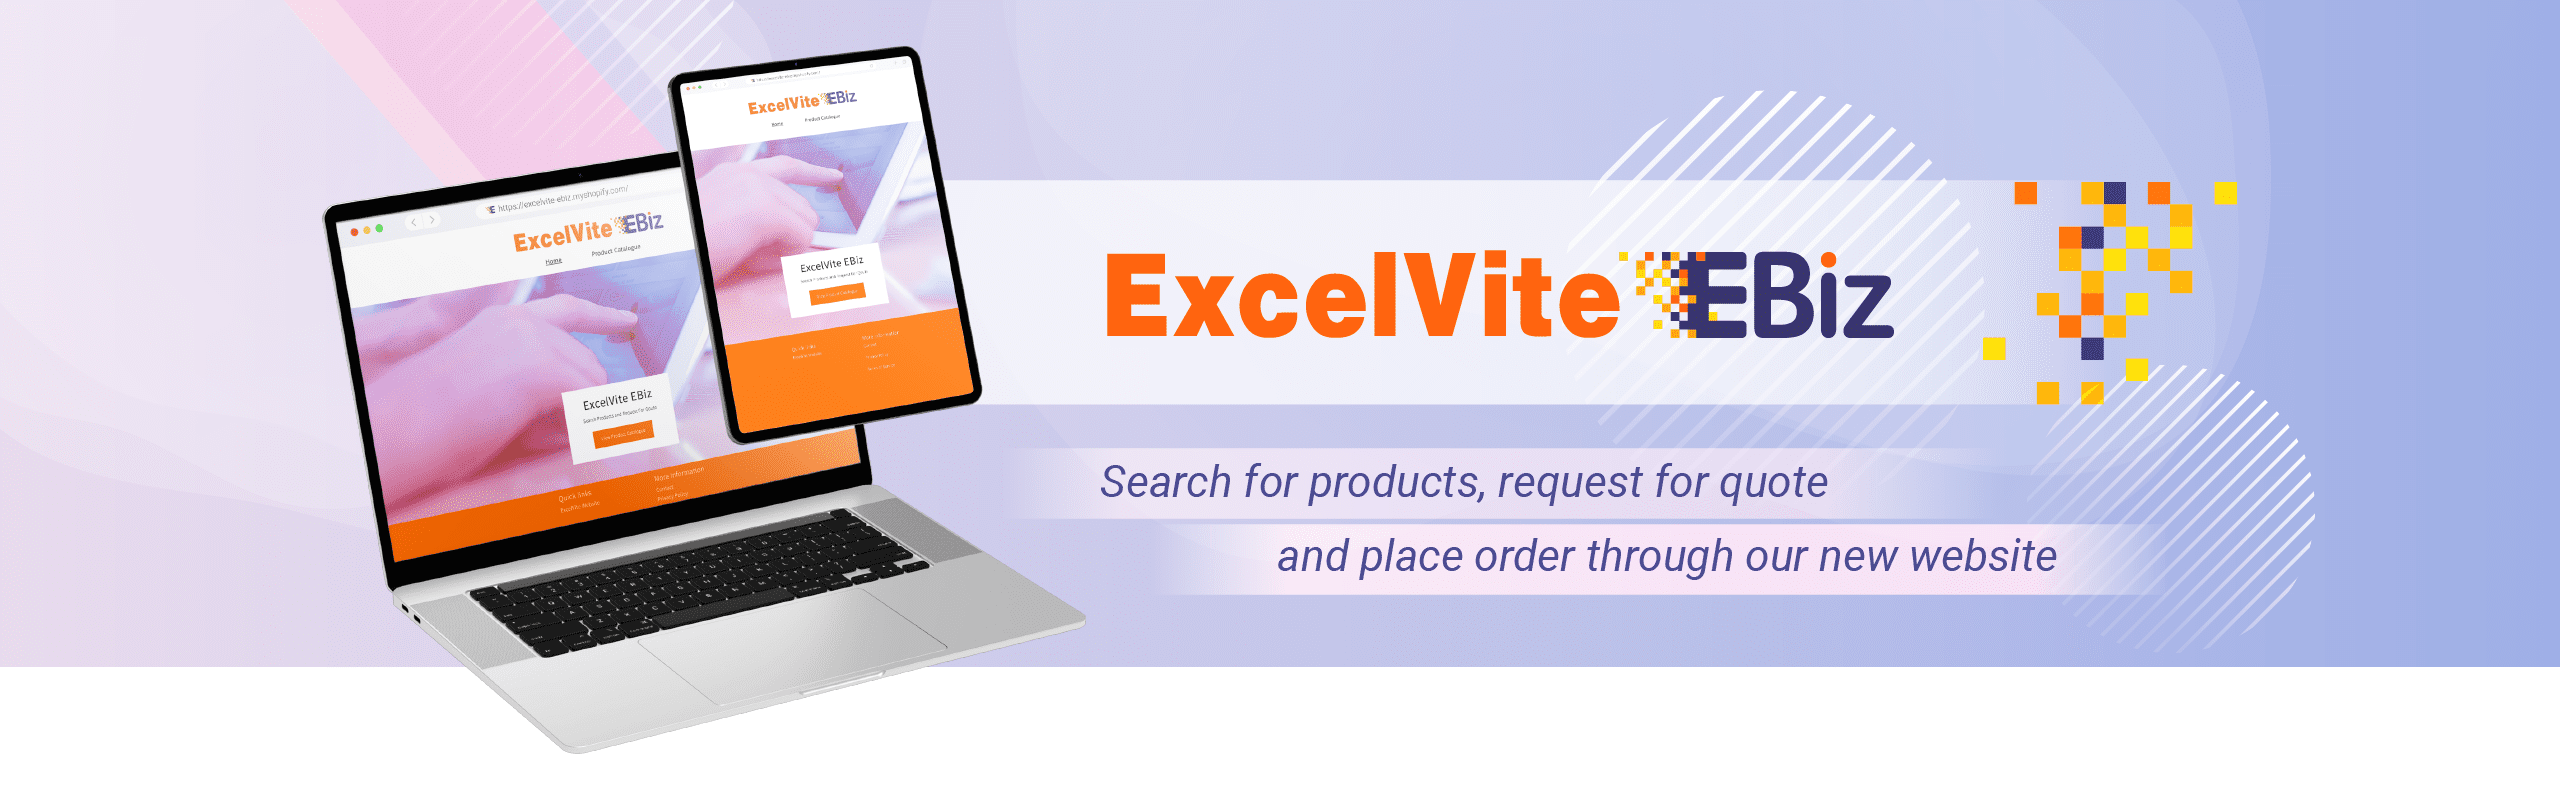 ExcelVite_EBiz_OnlineStore